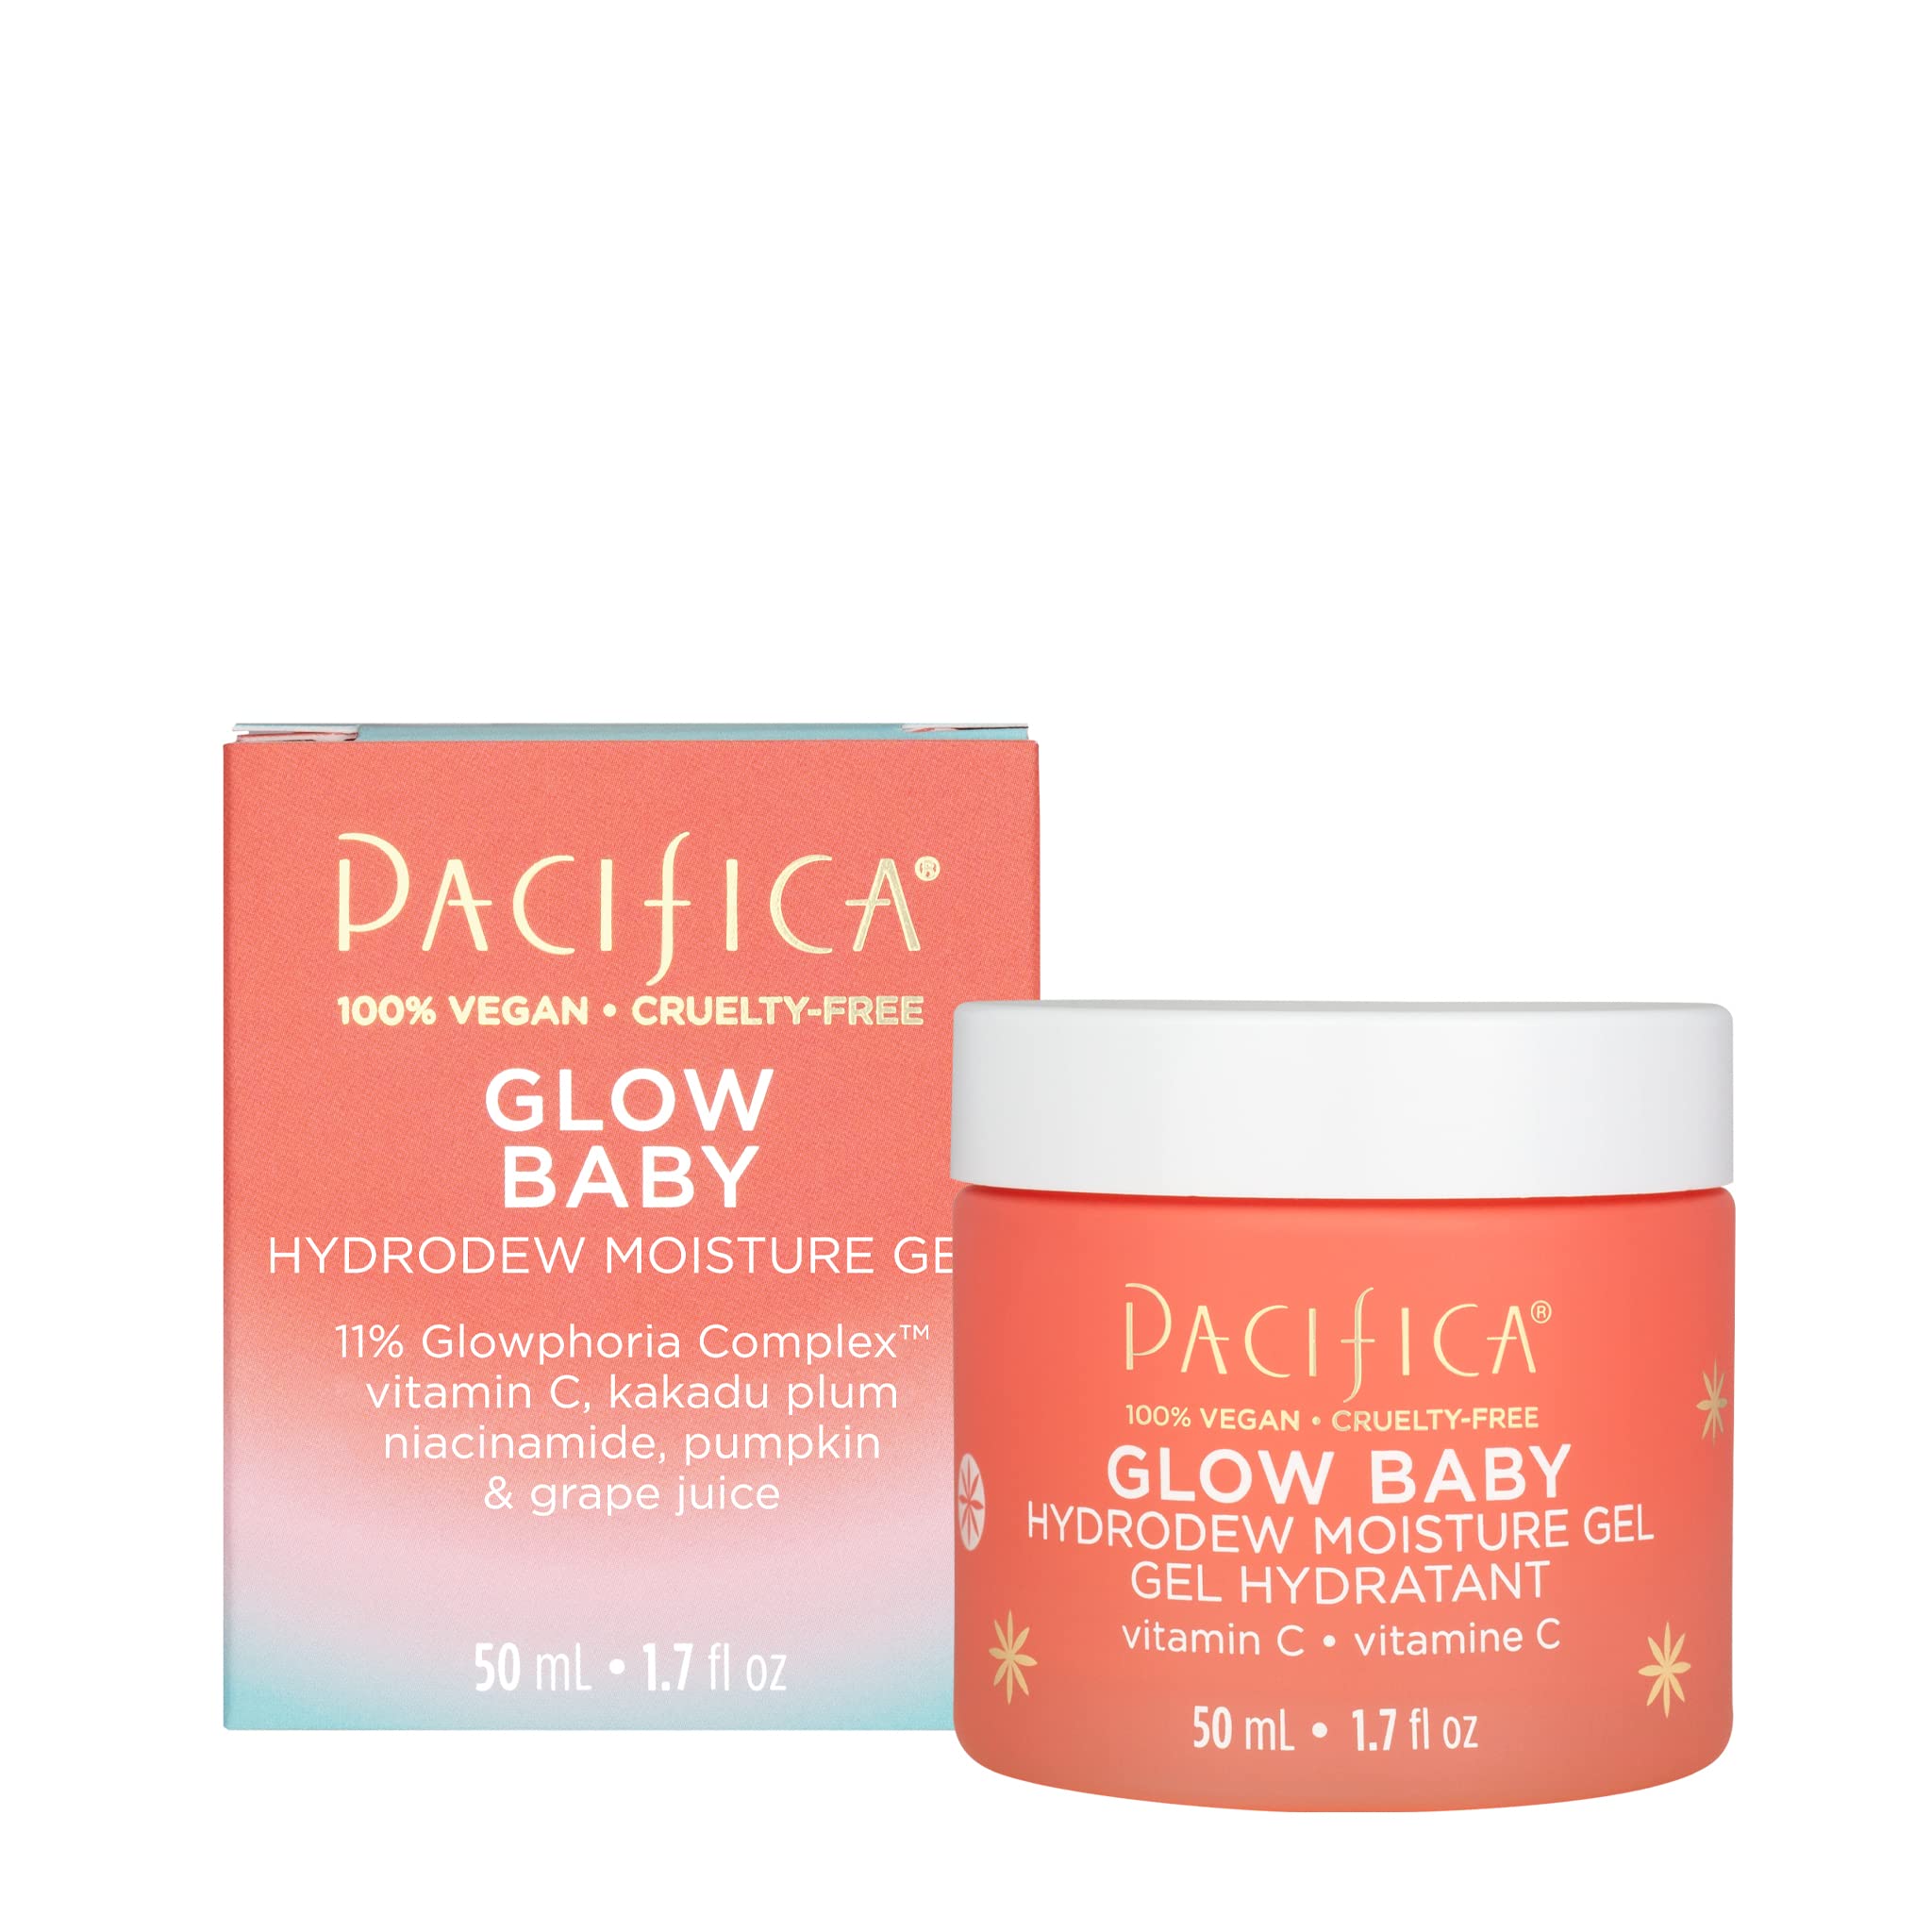 Pacifica Beauty, Glow Baby Hydrodew Gel Face Moisturizer, Dewy Glowing Skin, Vitamin C, Niacinamide, Fine Lines, Dryness, Dull Skin, Non-Stickformel, Hydrating, Vegan & Cruelty Free